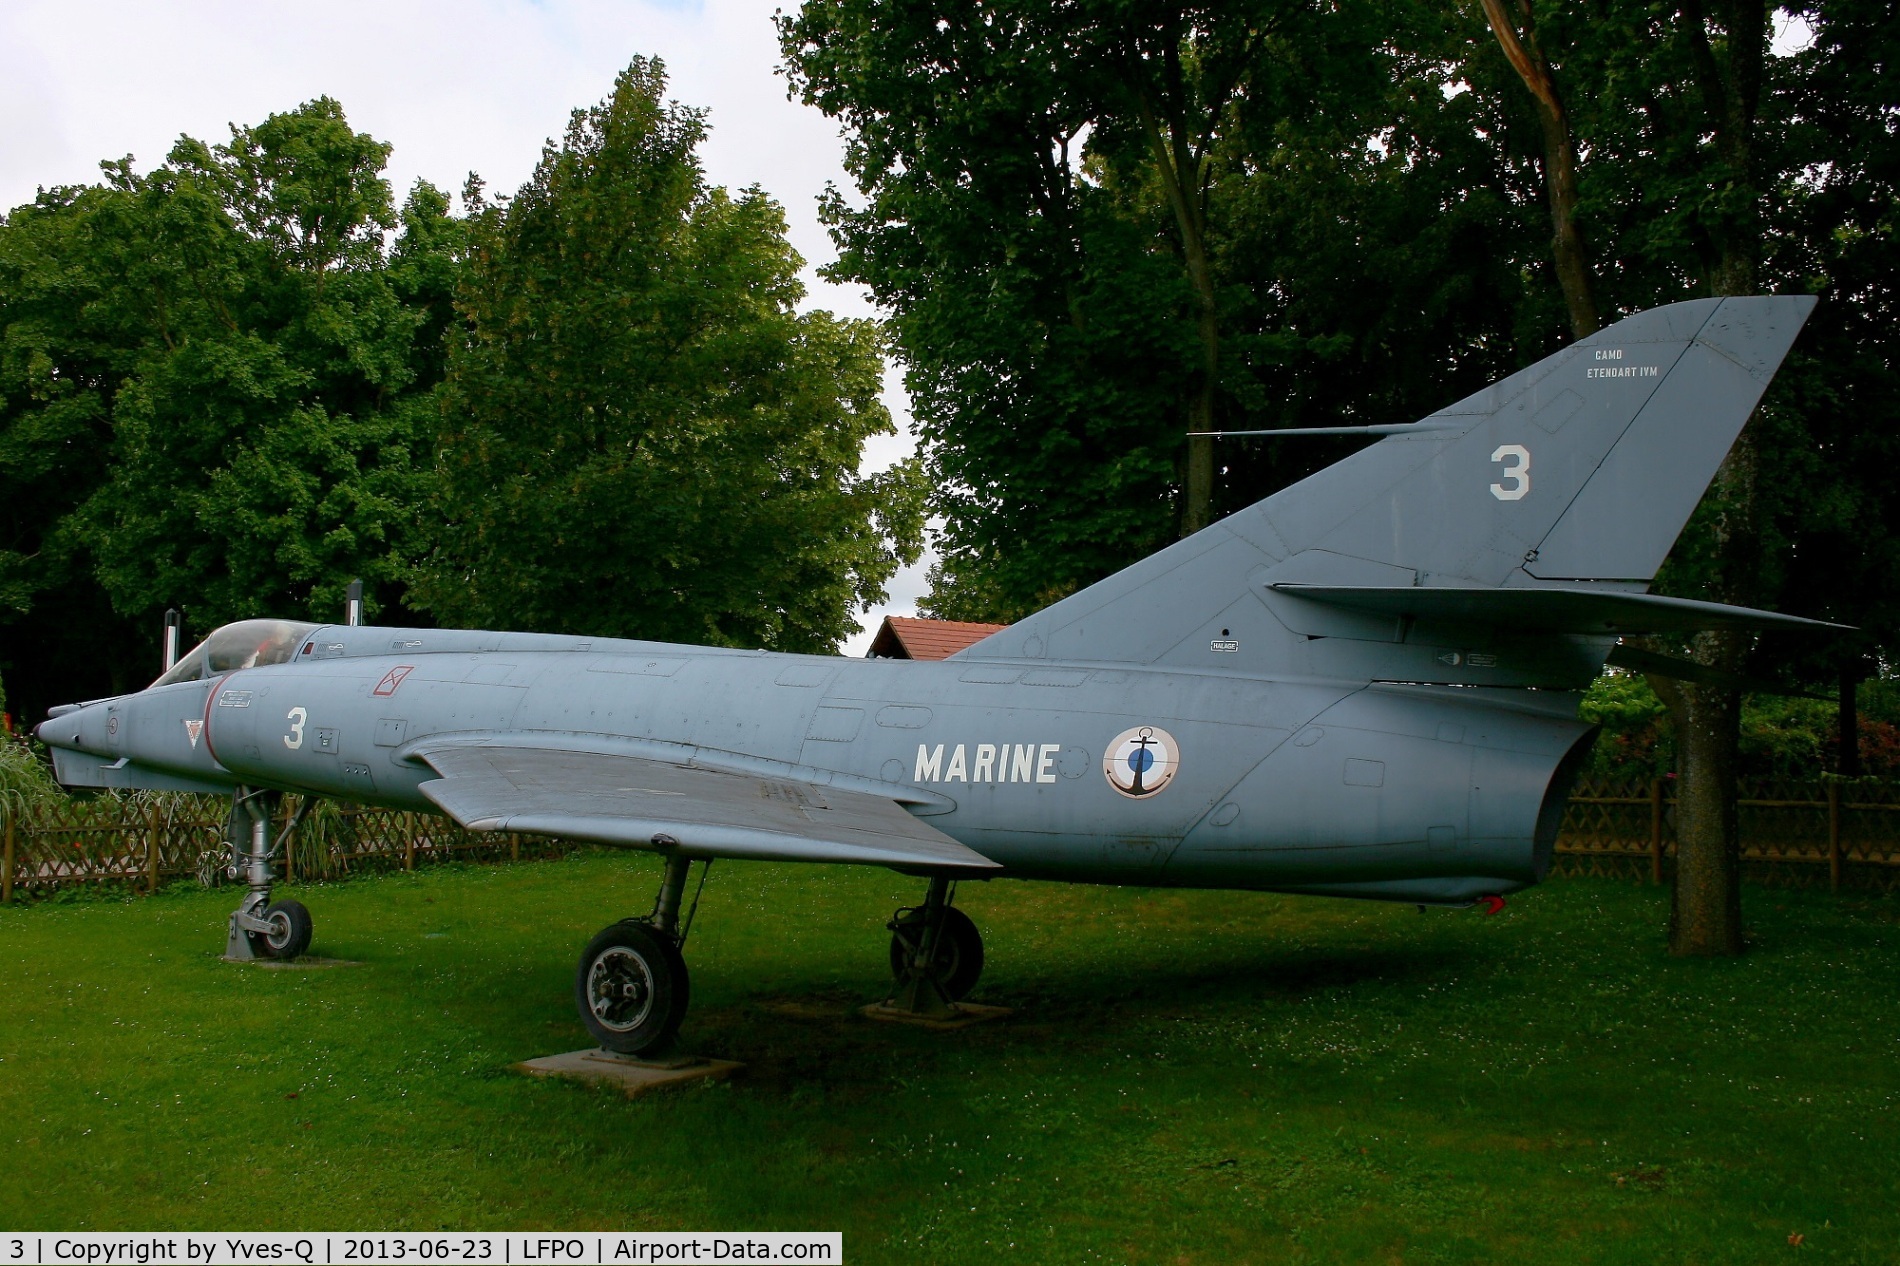 3, Dassault Etendard IV.M C/N 3, Dassault Etendard IV.M, Displayed at La coulée verte Park, Paray-Vieille Poste near Paris-Orly Airport.